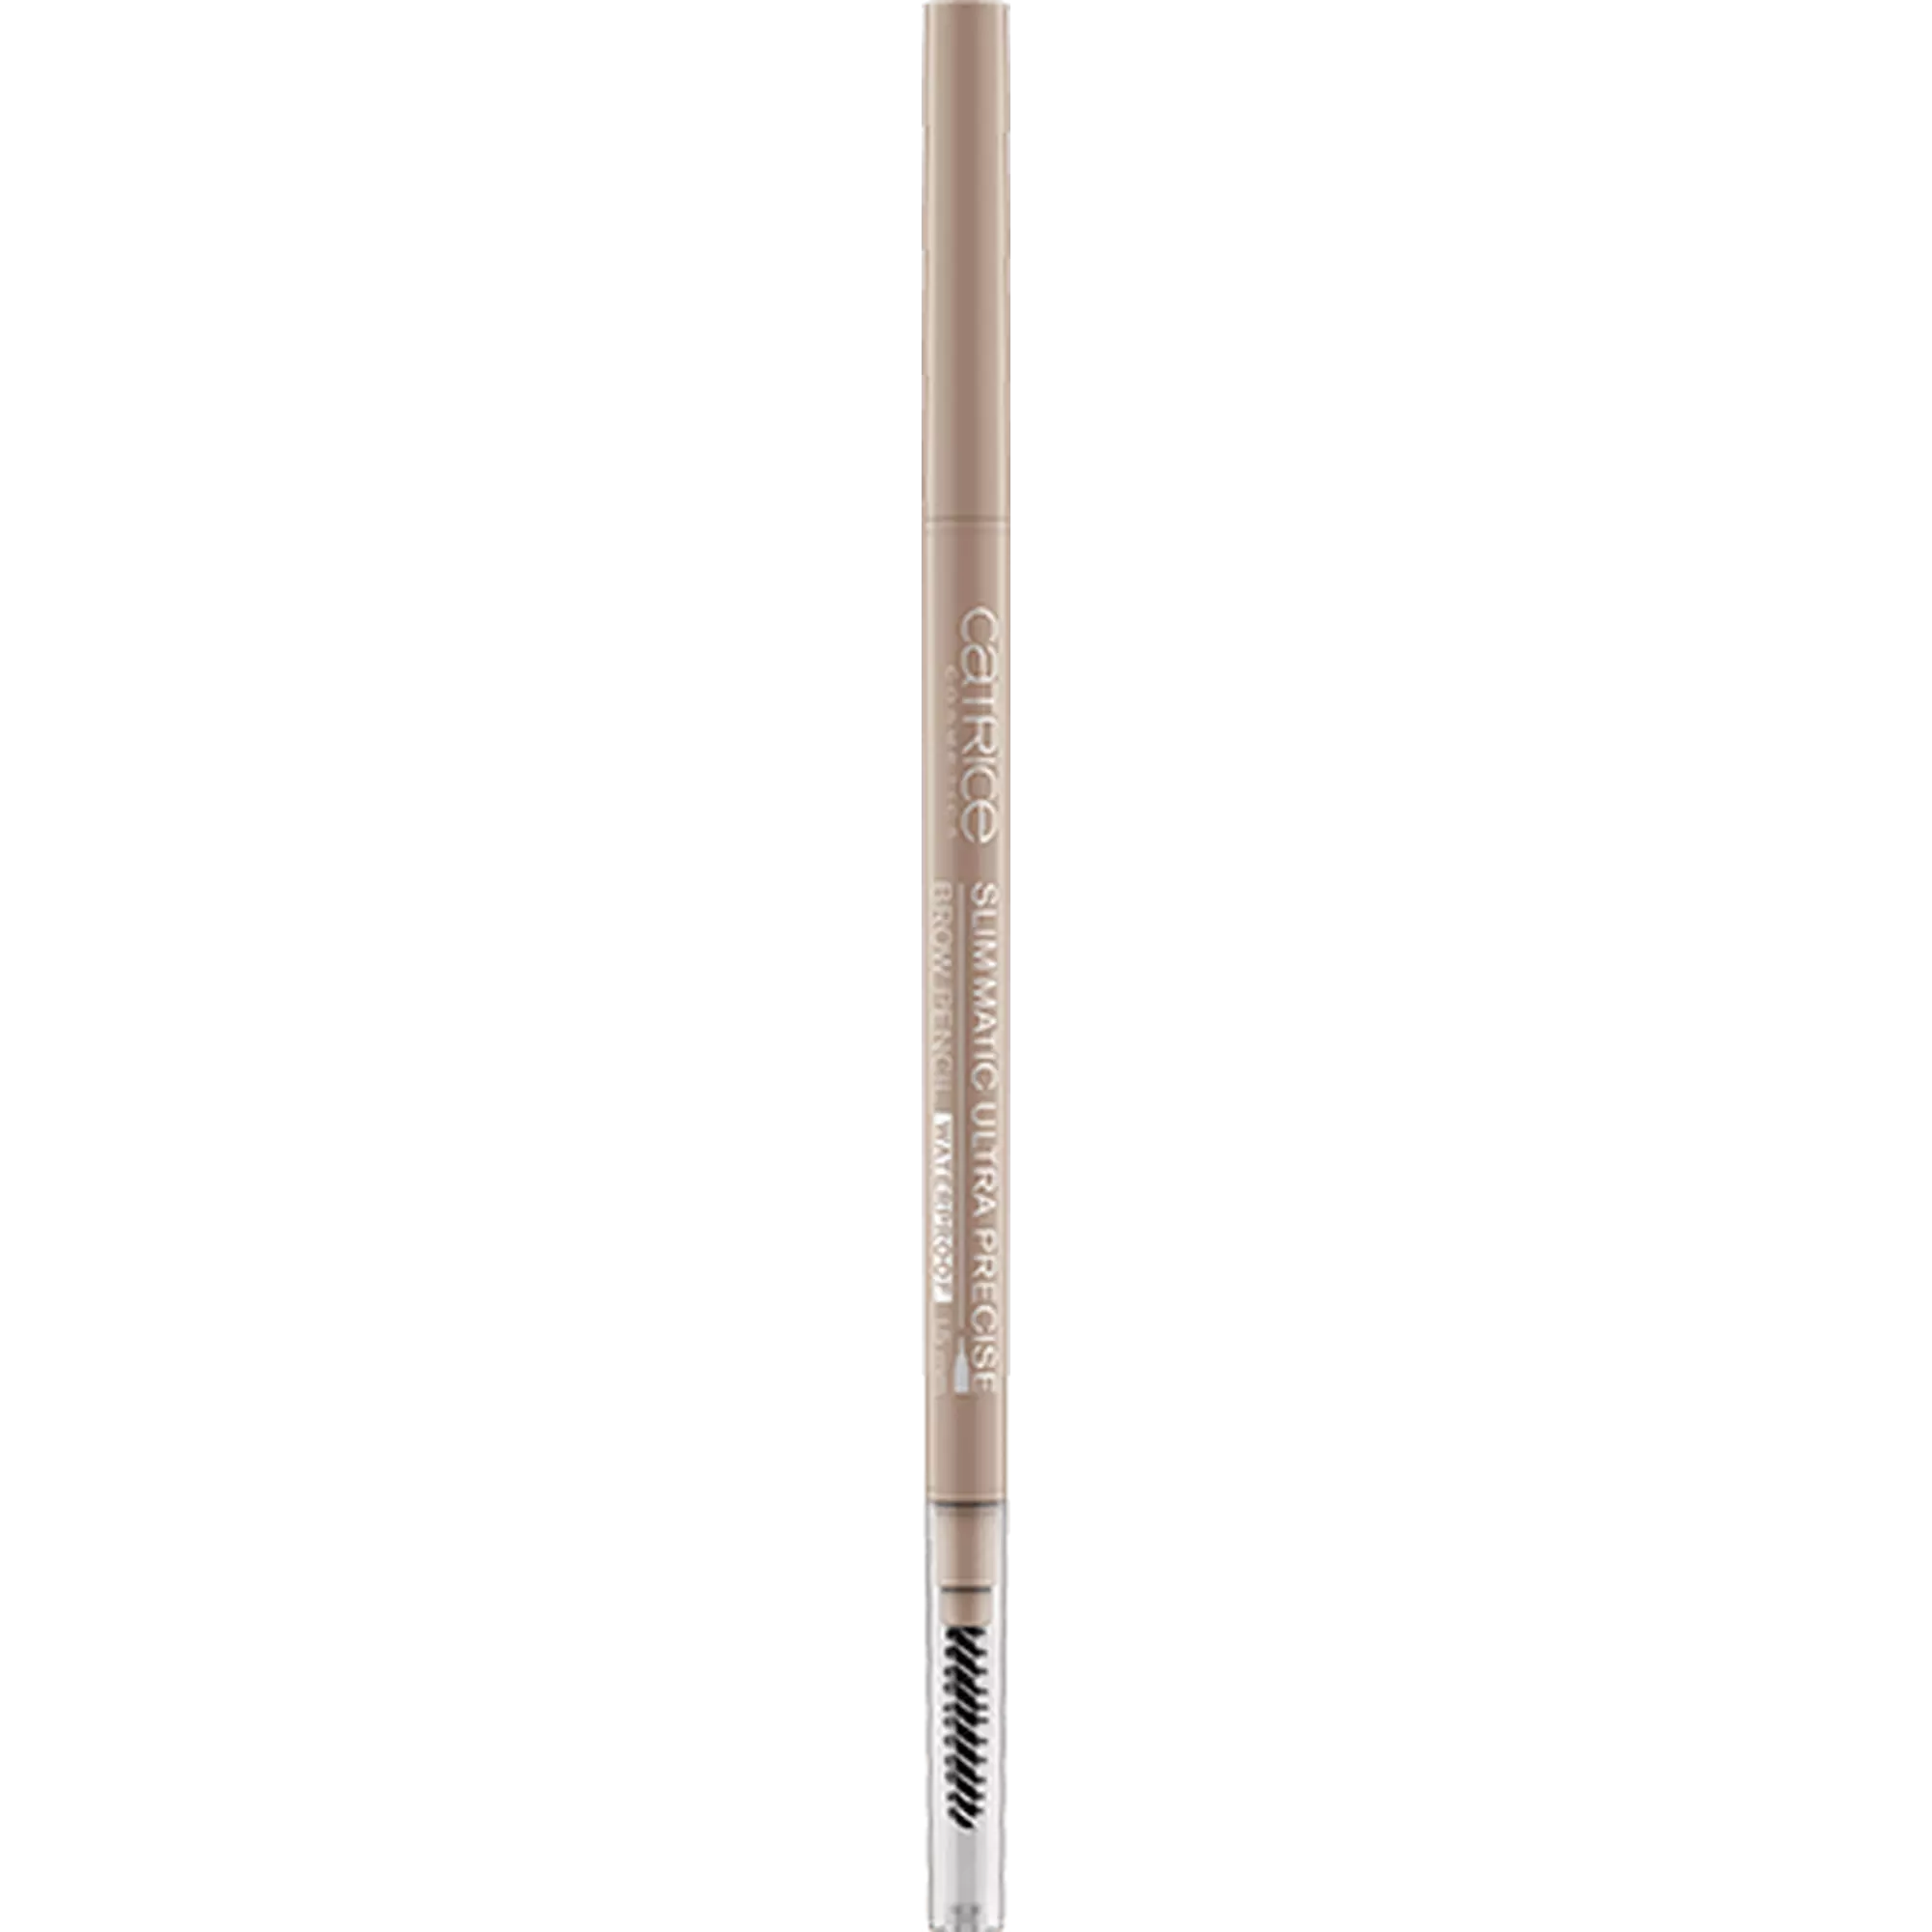 Catrice Slim'matic Waterproof Brow Pencil In 015 Ash Blonde